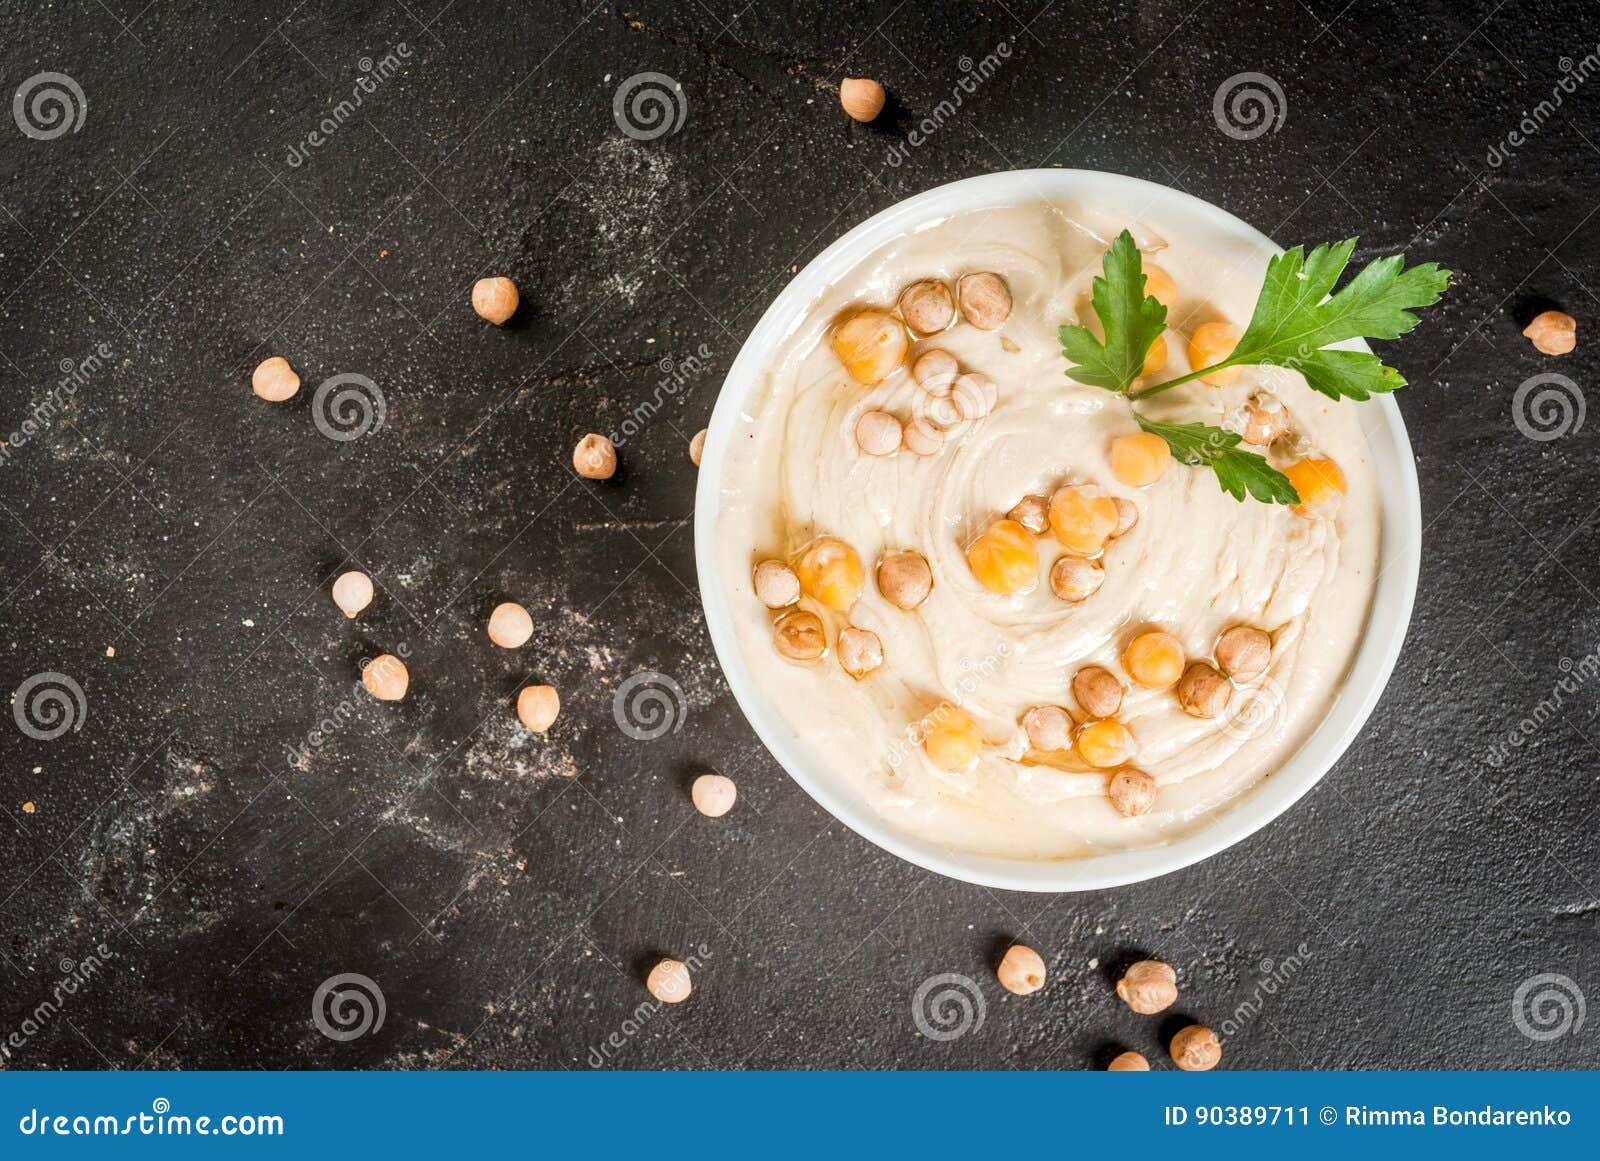 Bowl of hummus stock image. Image of pita, bowl, assorted - 90389711